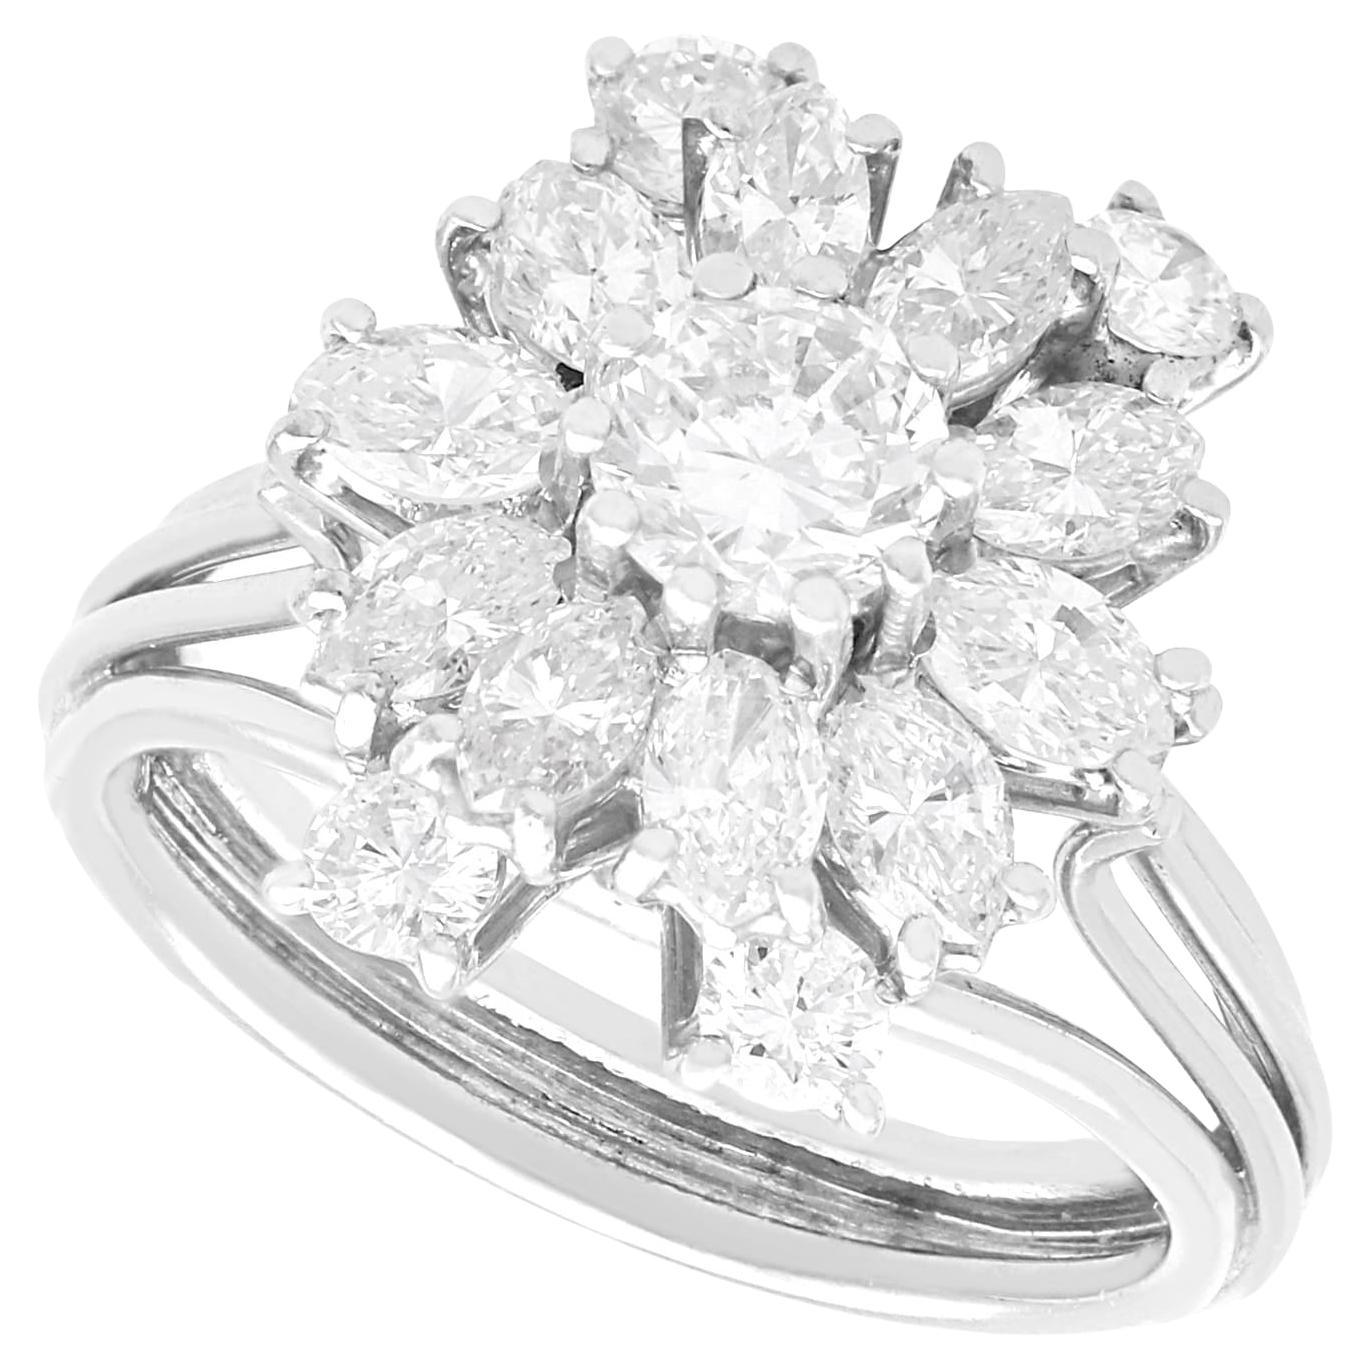 1950s 2.76 Carat Diamond and Platinum Engagement Ring